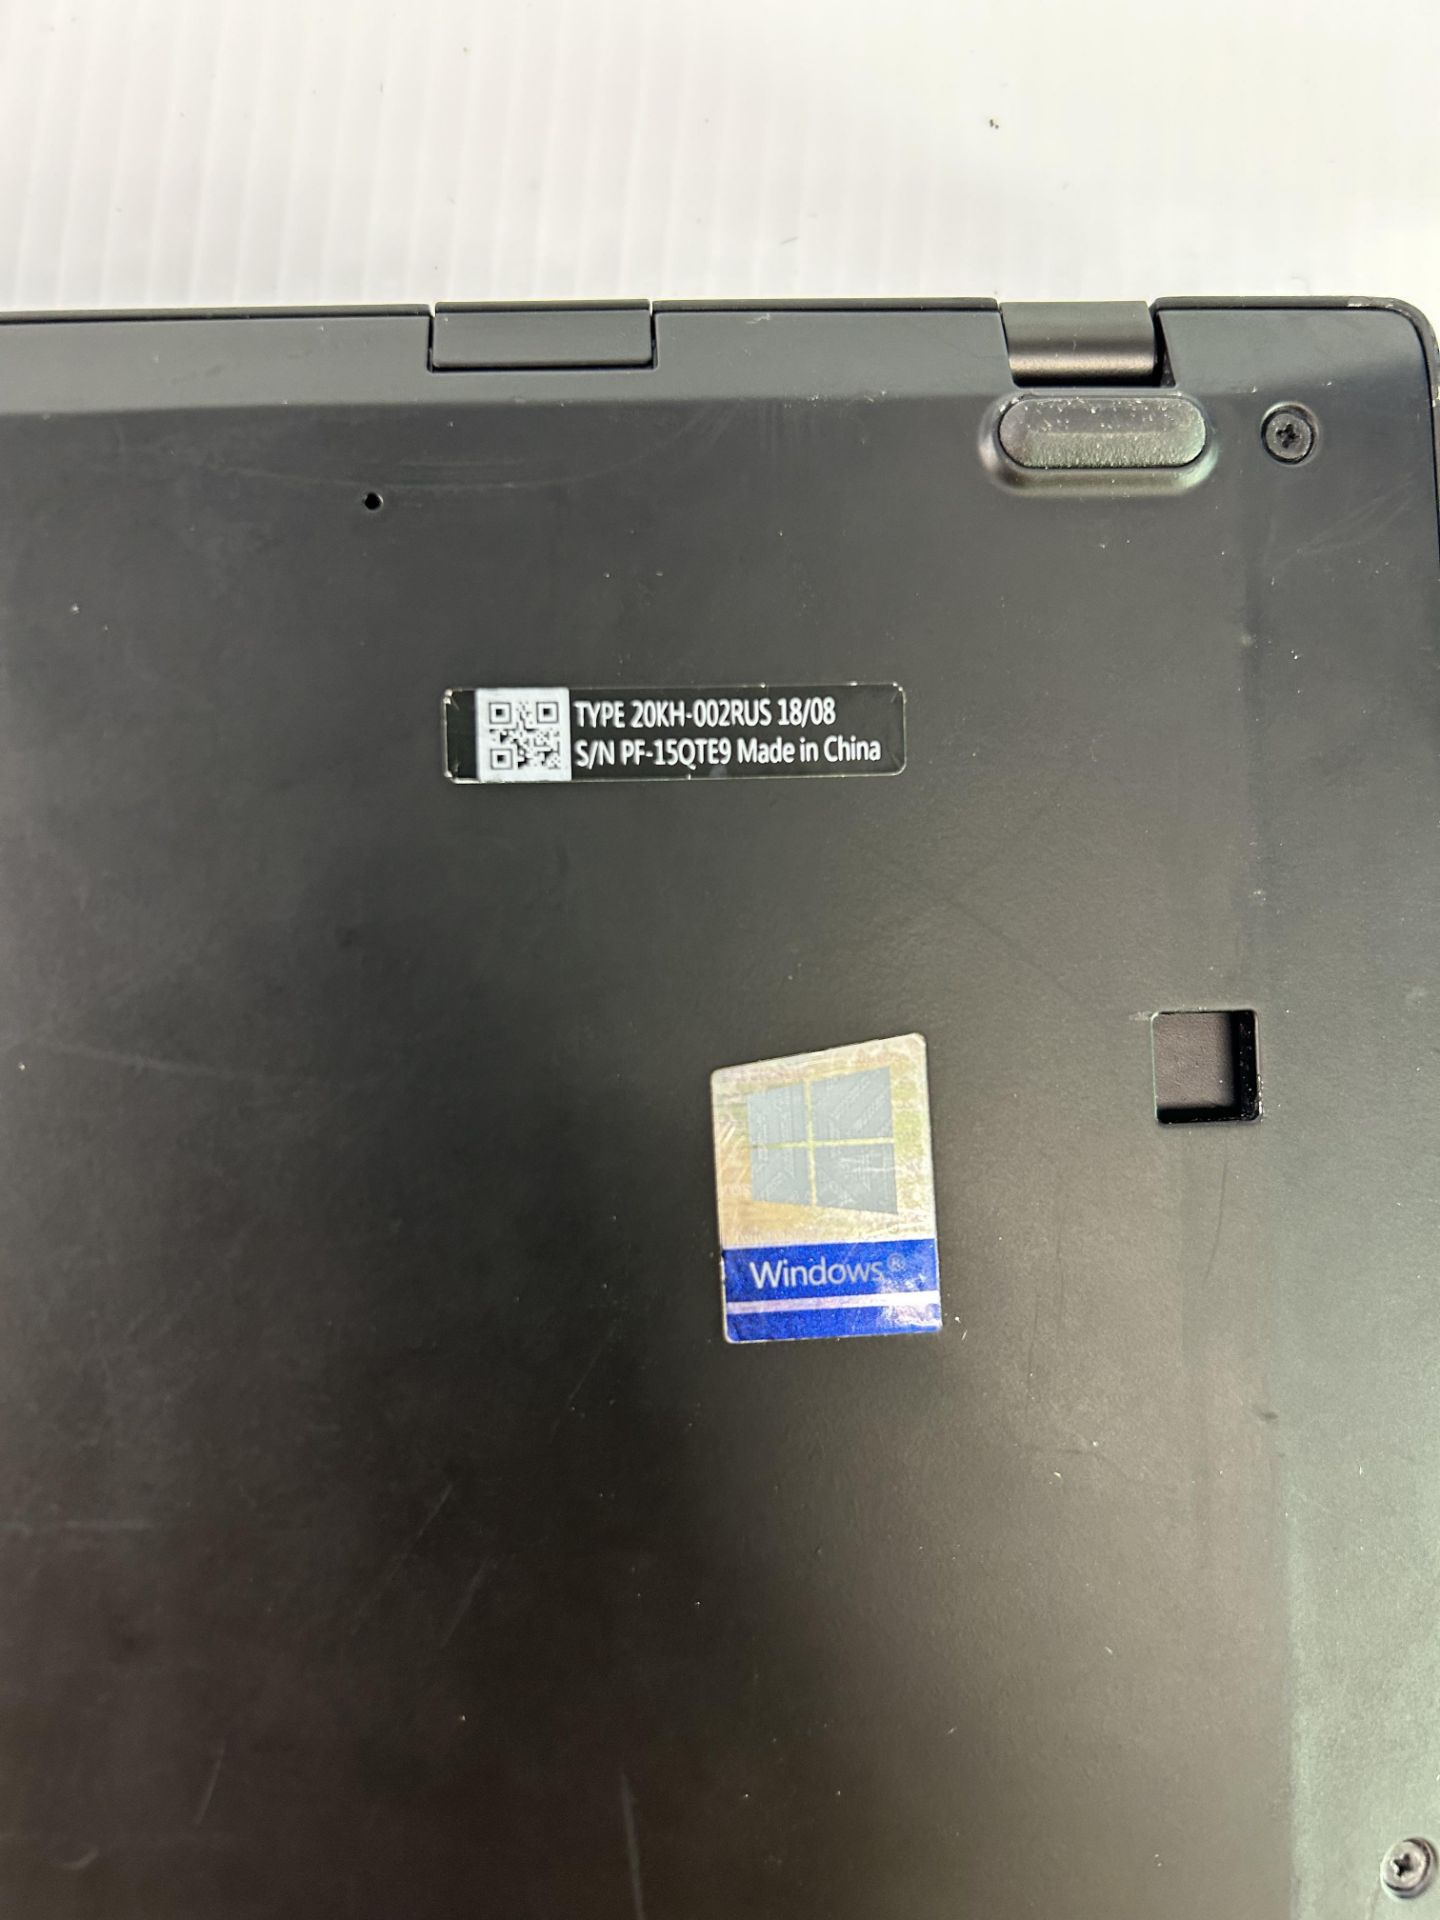 2018 6th Generation ThinkPad X1 Carbon Laptop Model- 20kh-002rus 18/08, 512GB Hard Drive, 8th Gen I7 - Image 3 of 3